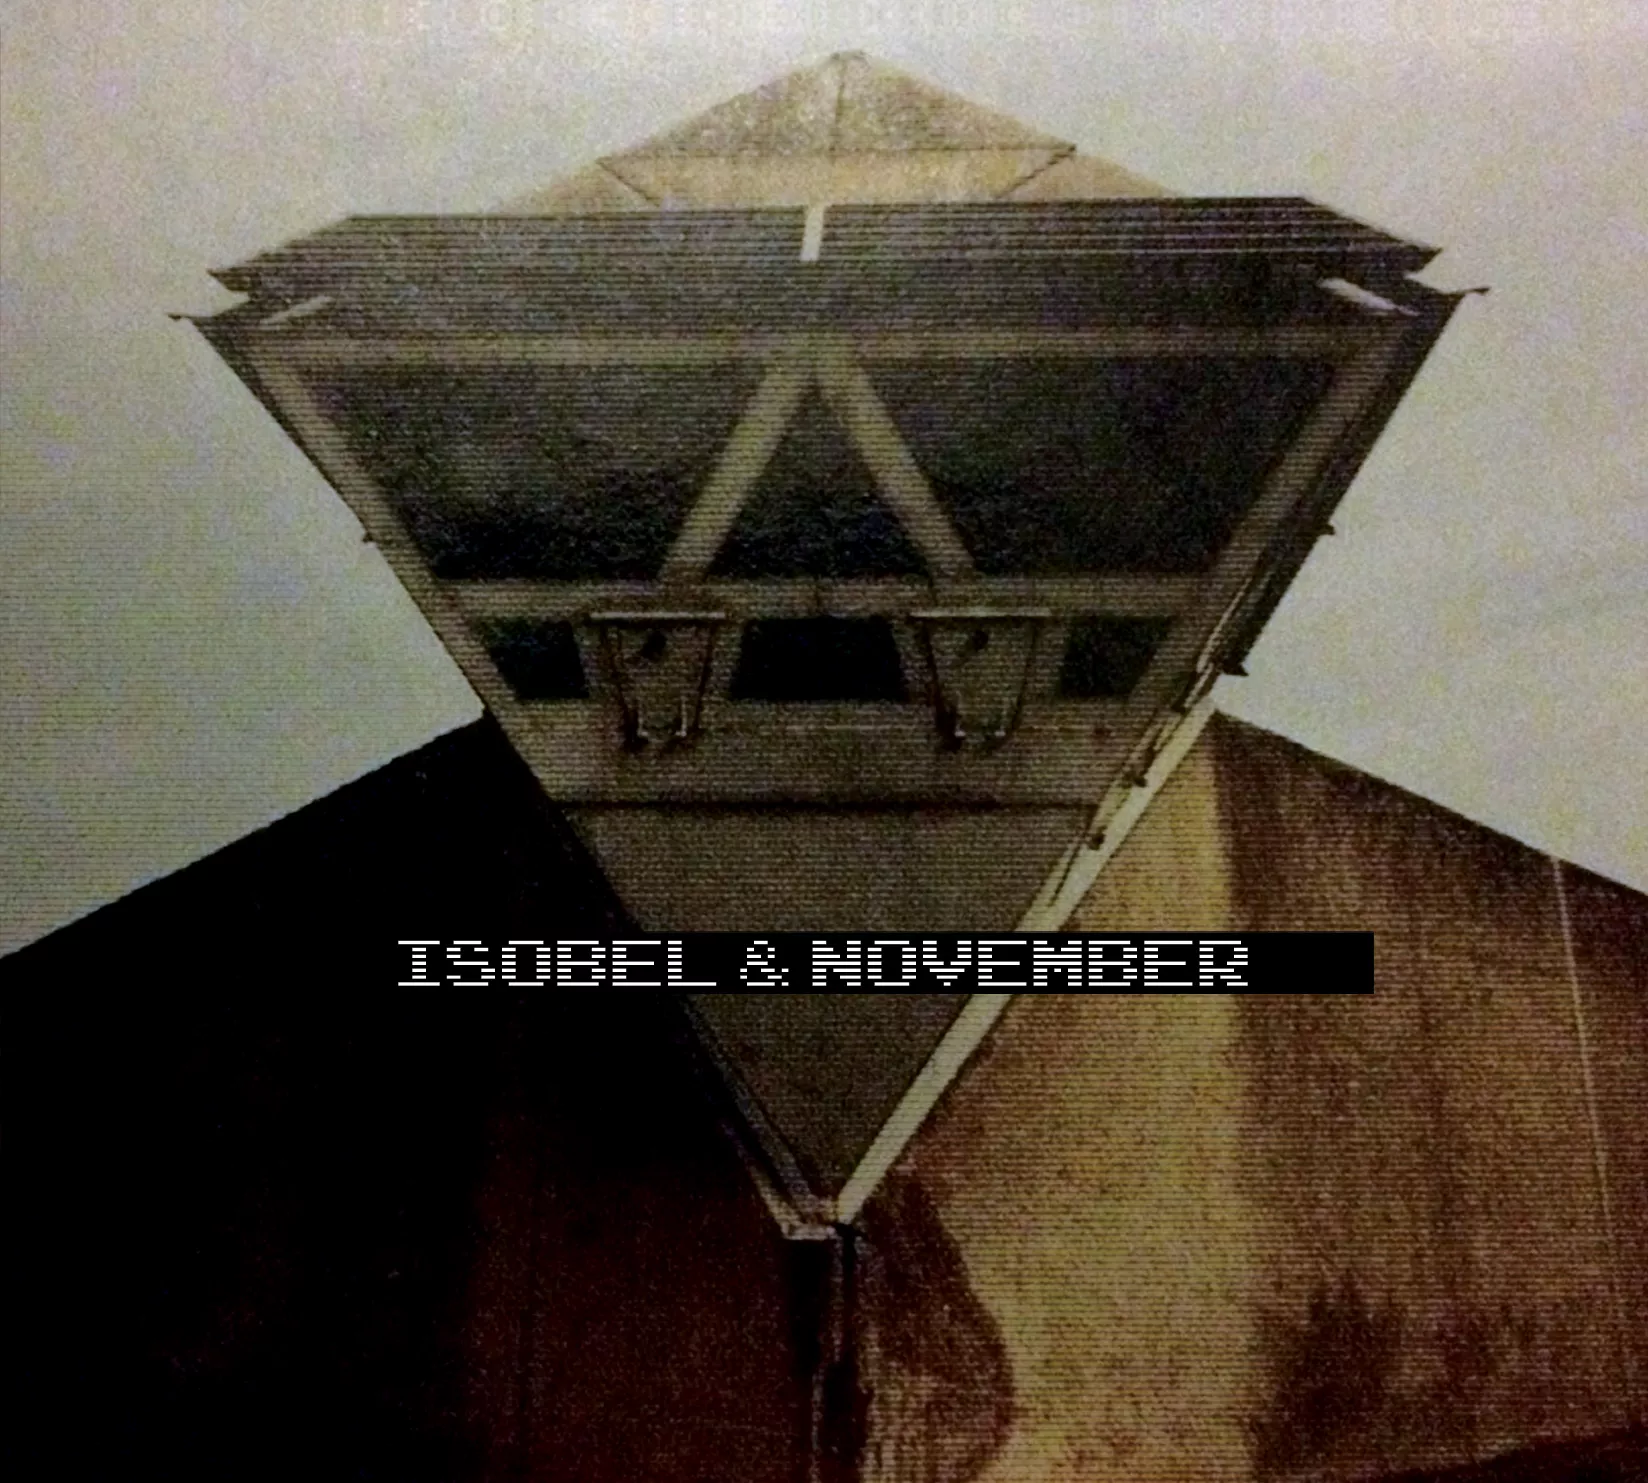 Isobel & November - Isobel & November